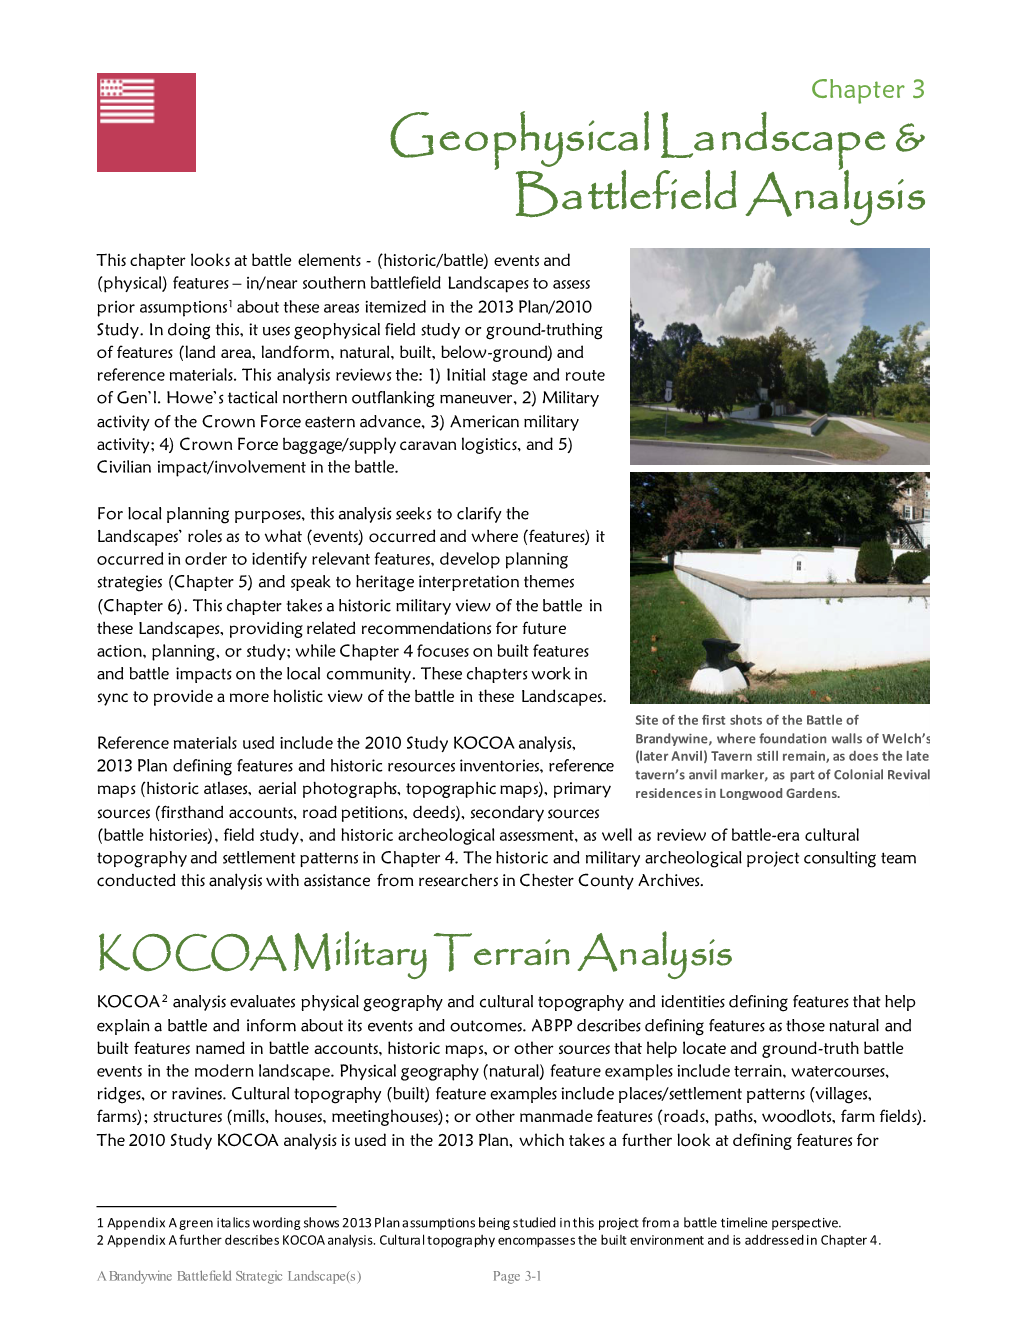 Geophysical Landscape & Battlefield Analysis